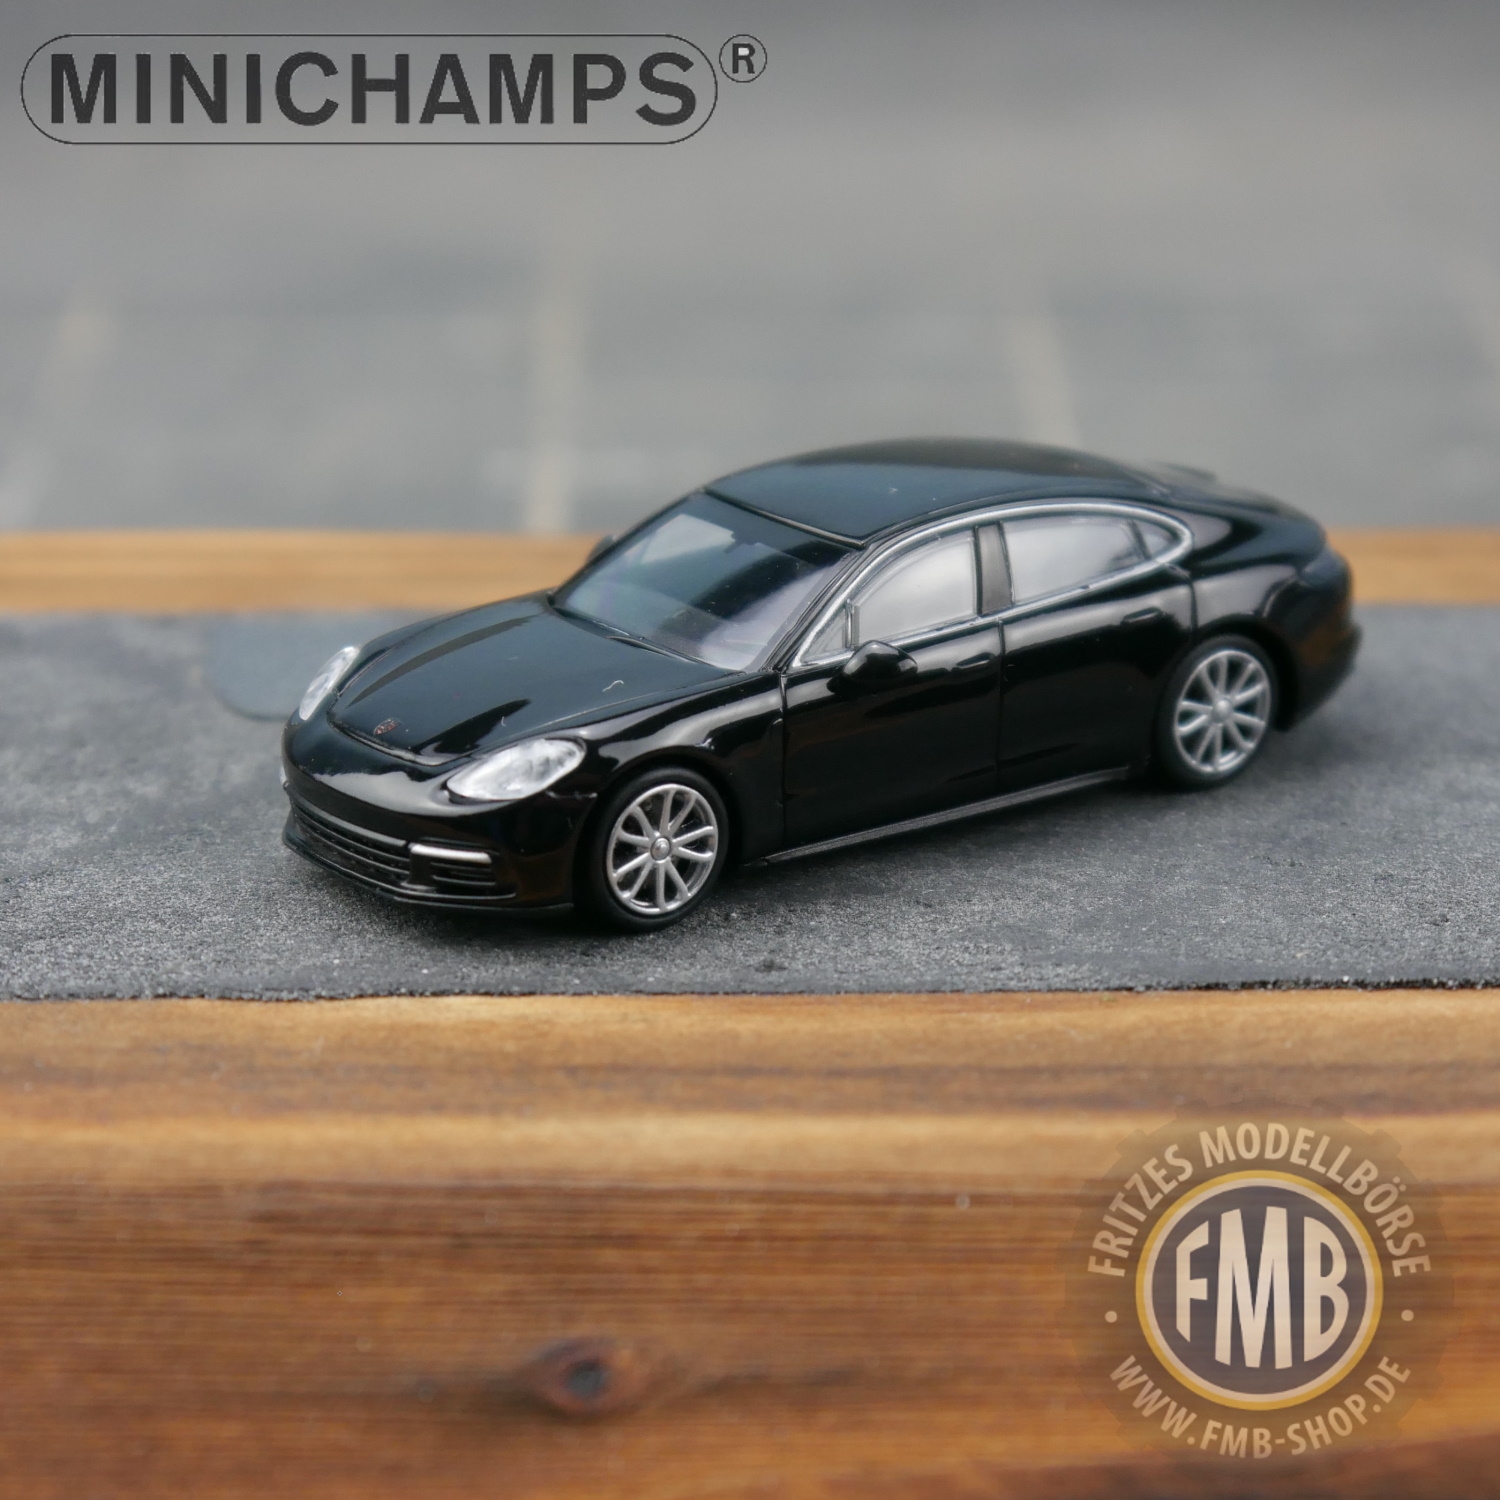 870 067104-1:87 schwarz 2015 Minichamps Porsche Panamera 4 S